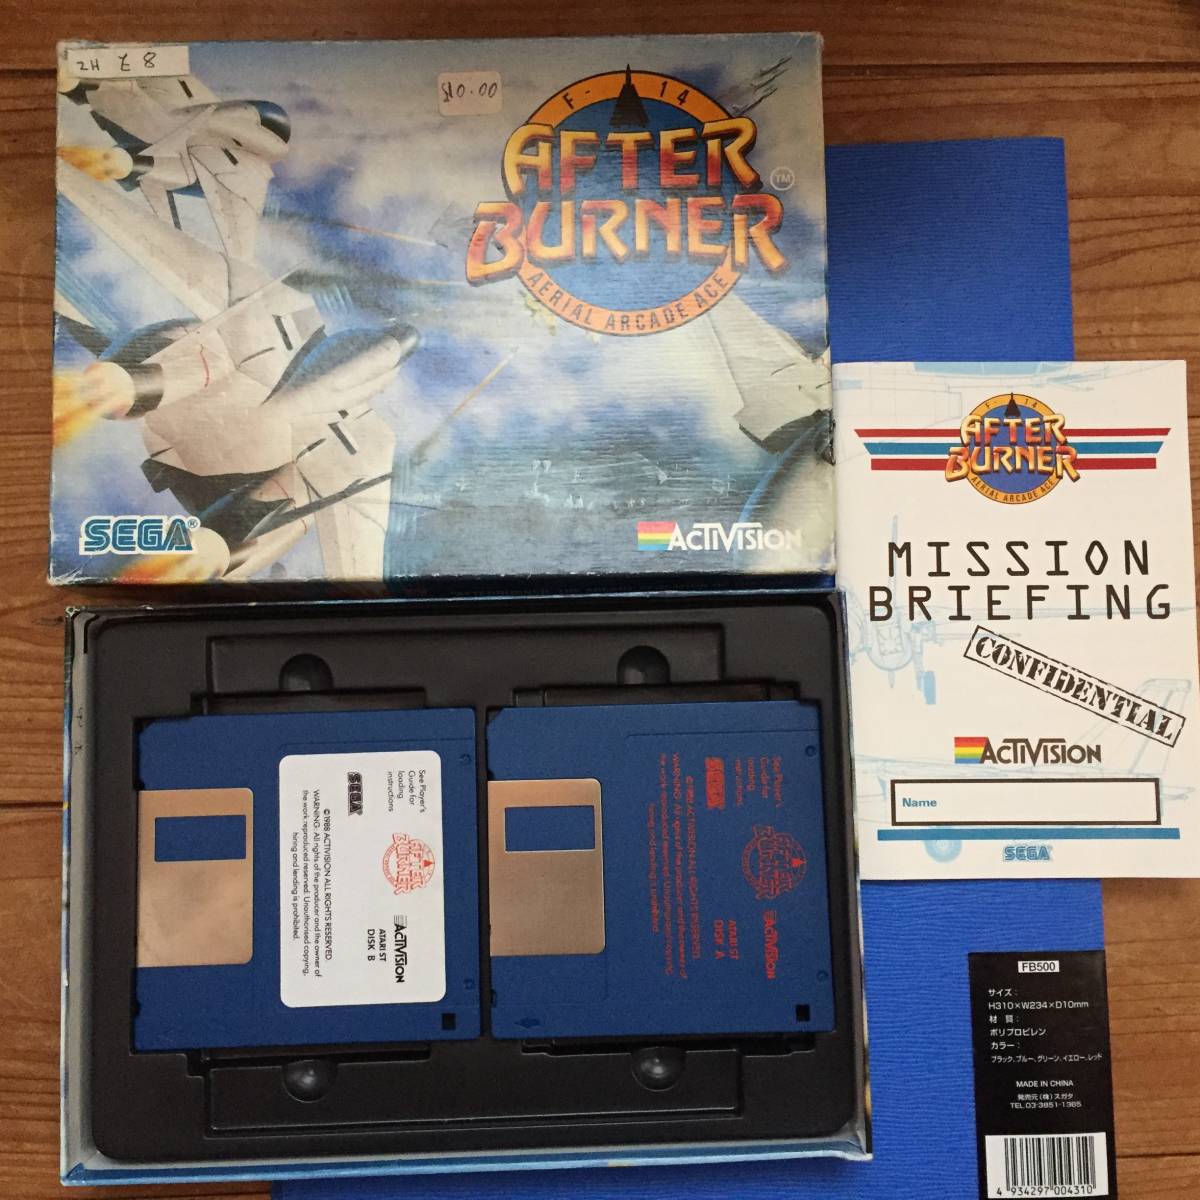 Atari ST after burner AfterBurner Sega Activision floppy disk retro game action atali fighter (aircraft) game 